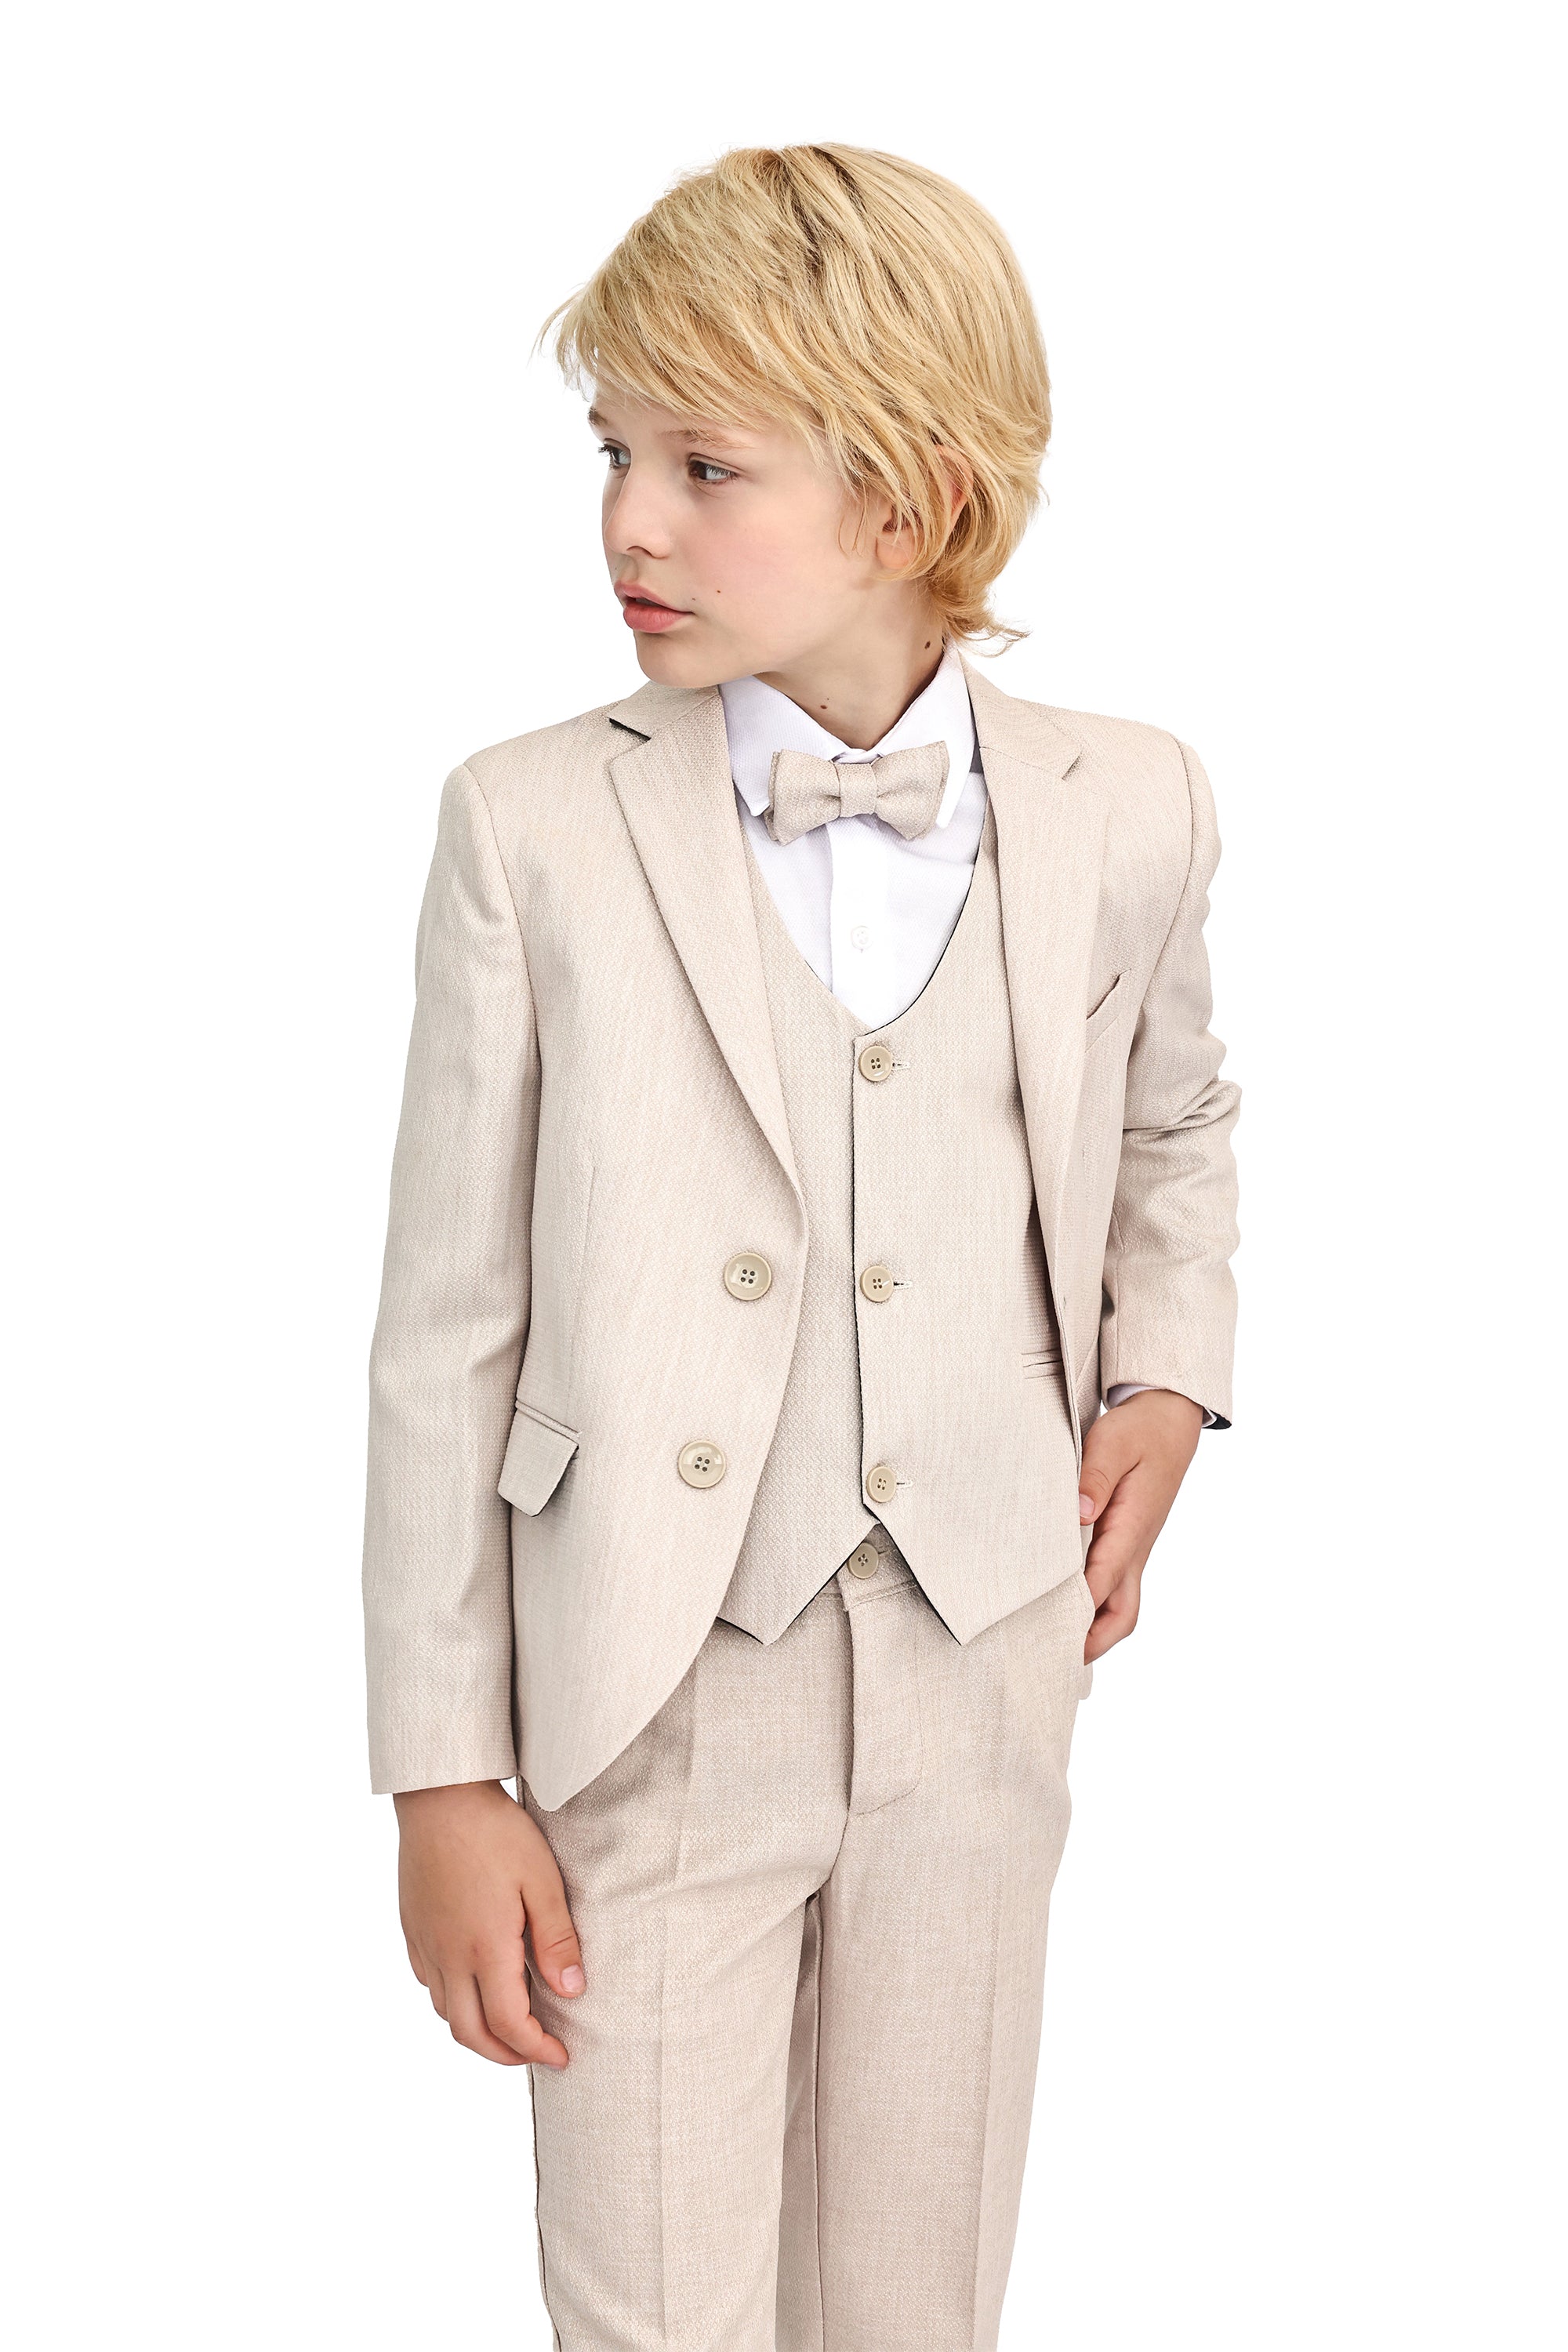 Dresswear Set for Boys' Formal Suit Outfit 5-Piece